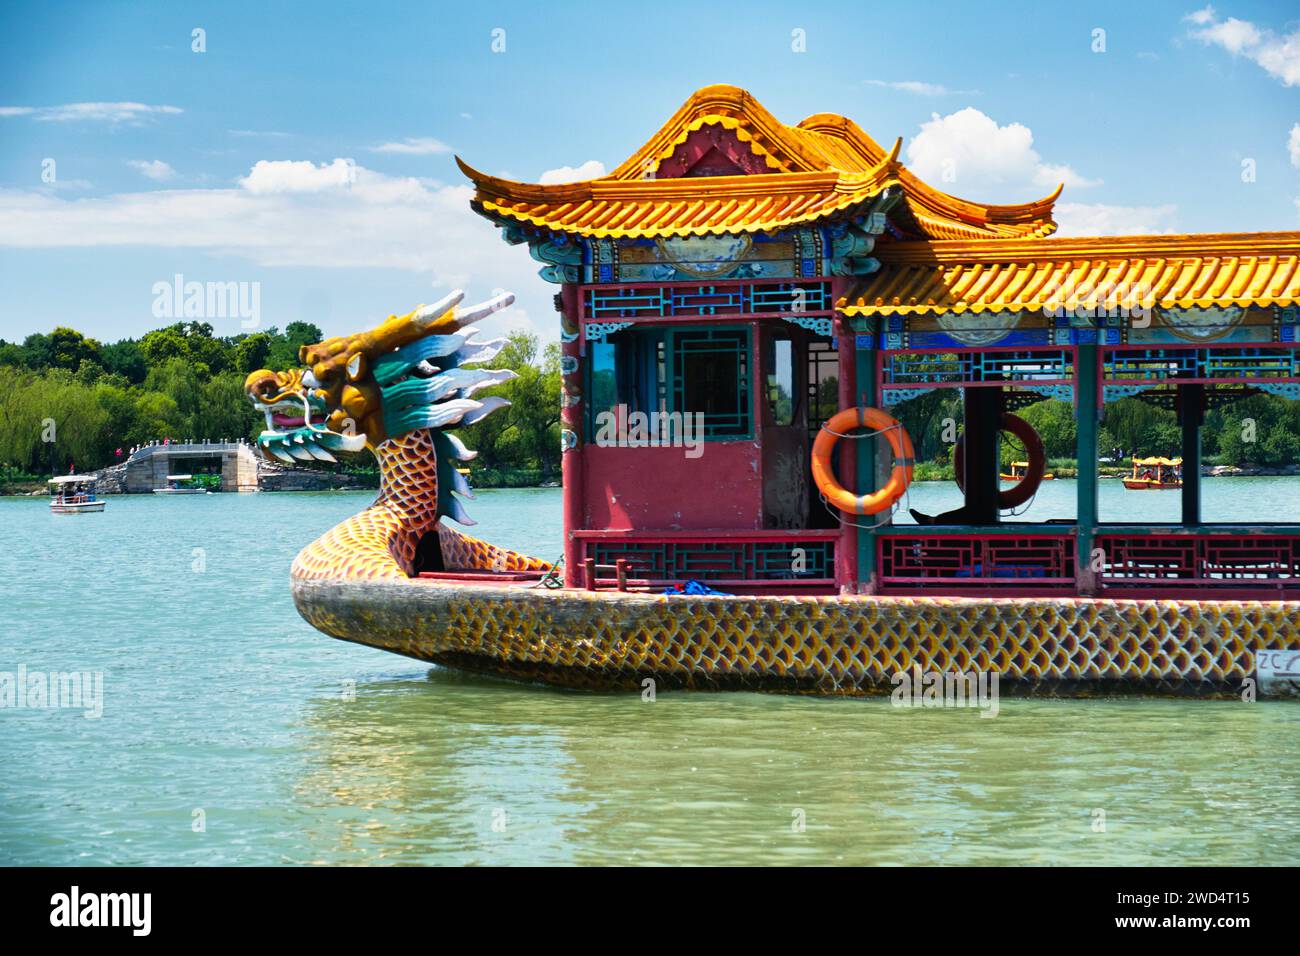 Close Up View of a Dragon Boat on Longtan Lake, Beijing China Stock Photo